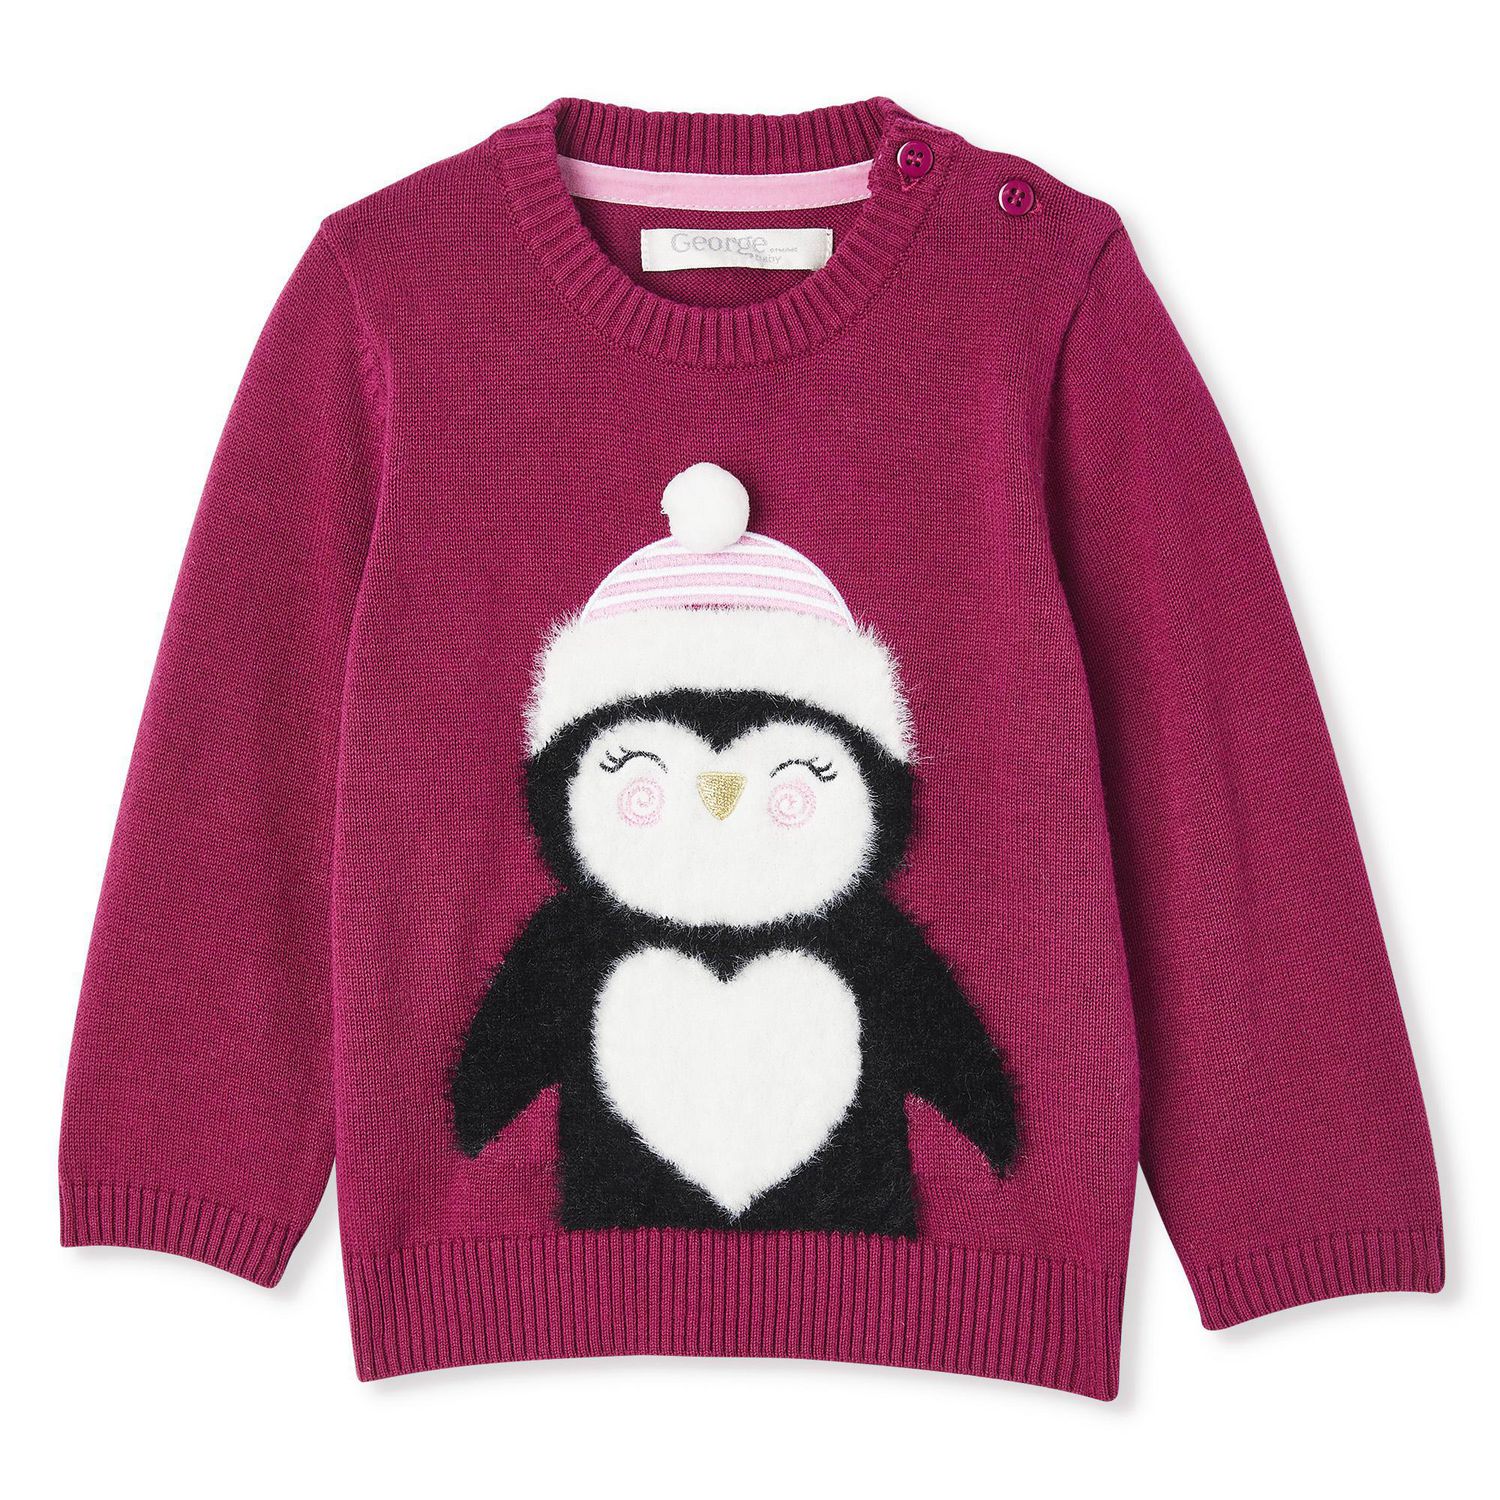 George Baby Girls' Critter Sweater | Walmart Canada